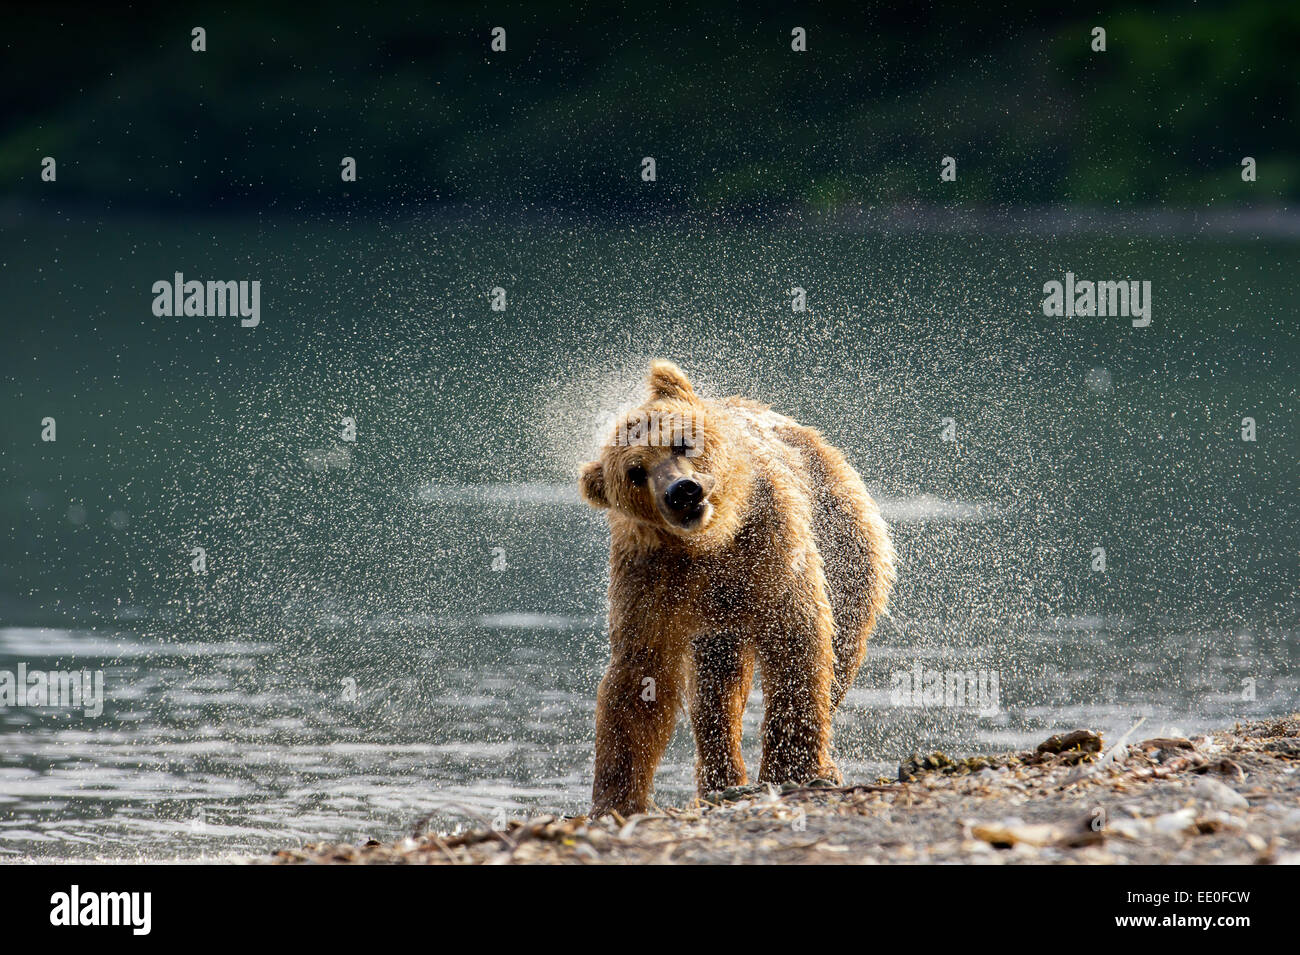 brown bear shakes its fur dry Stock Photo